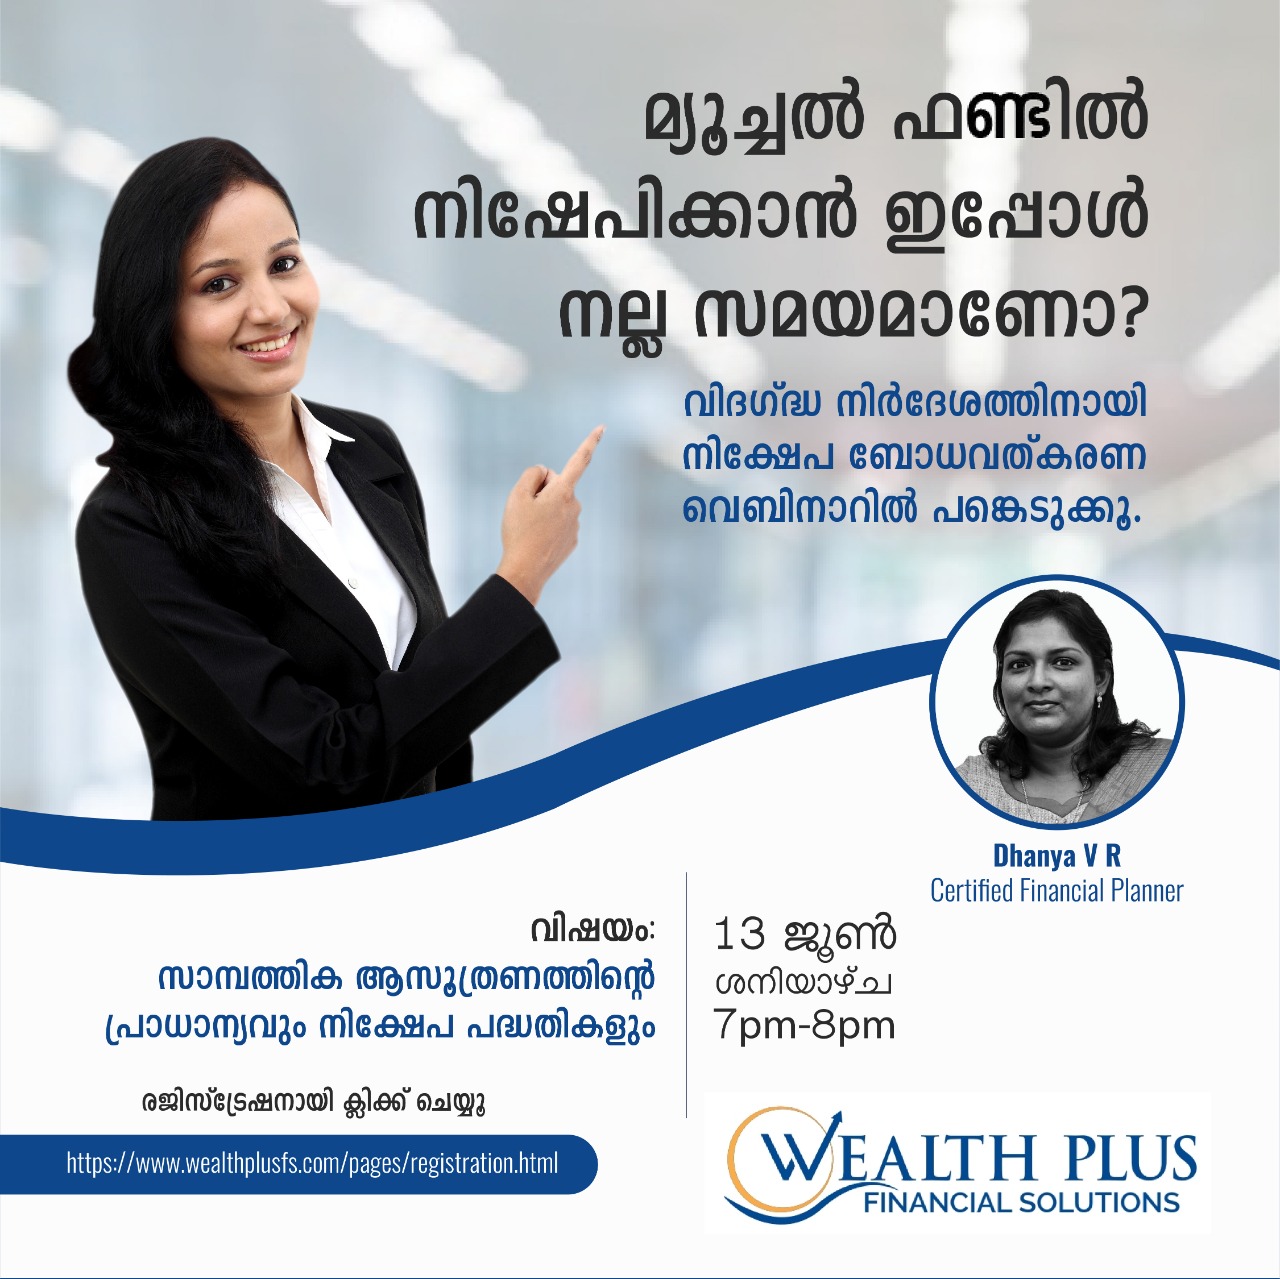 Mrs. Dhanya V R - Wealth Plus Financial Solutions